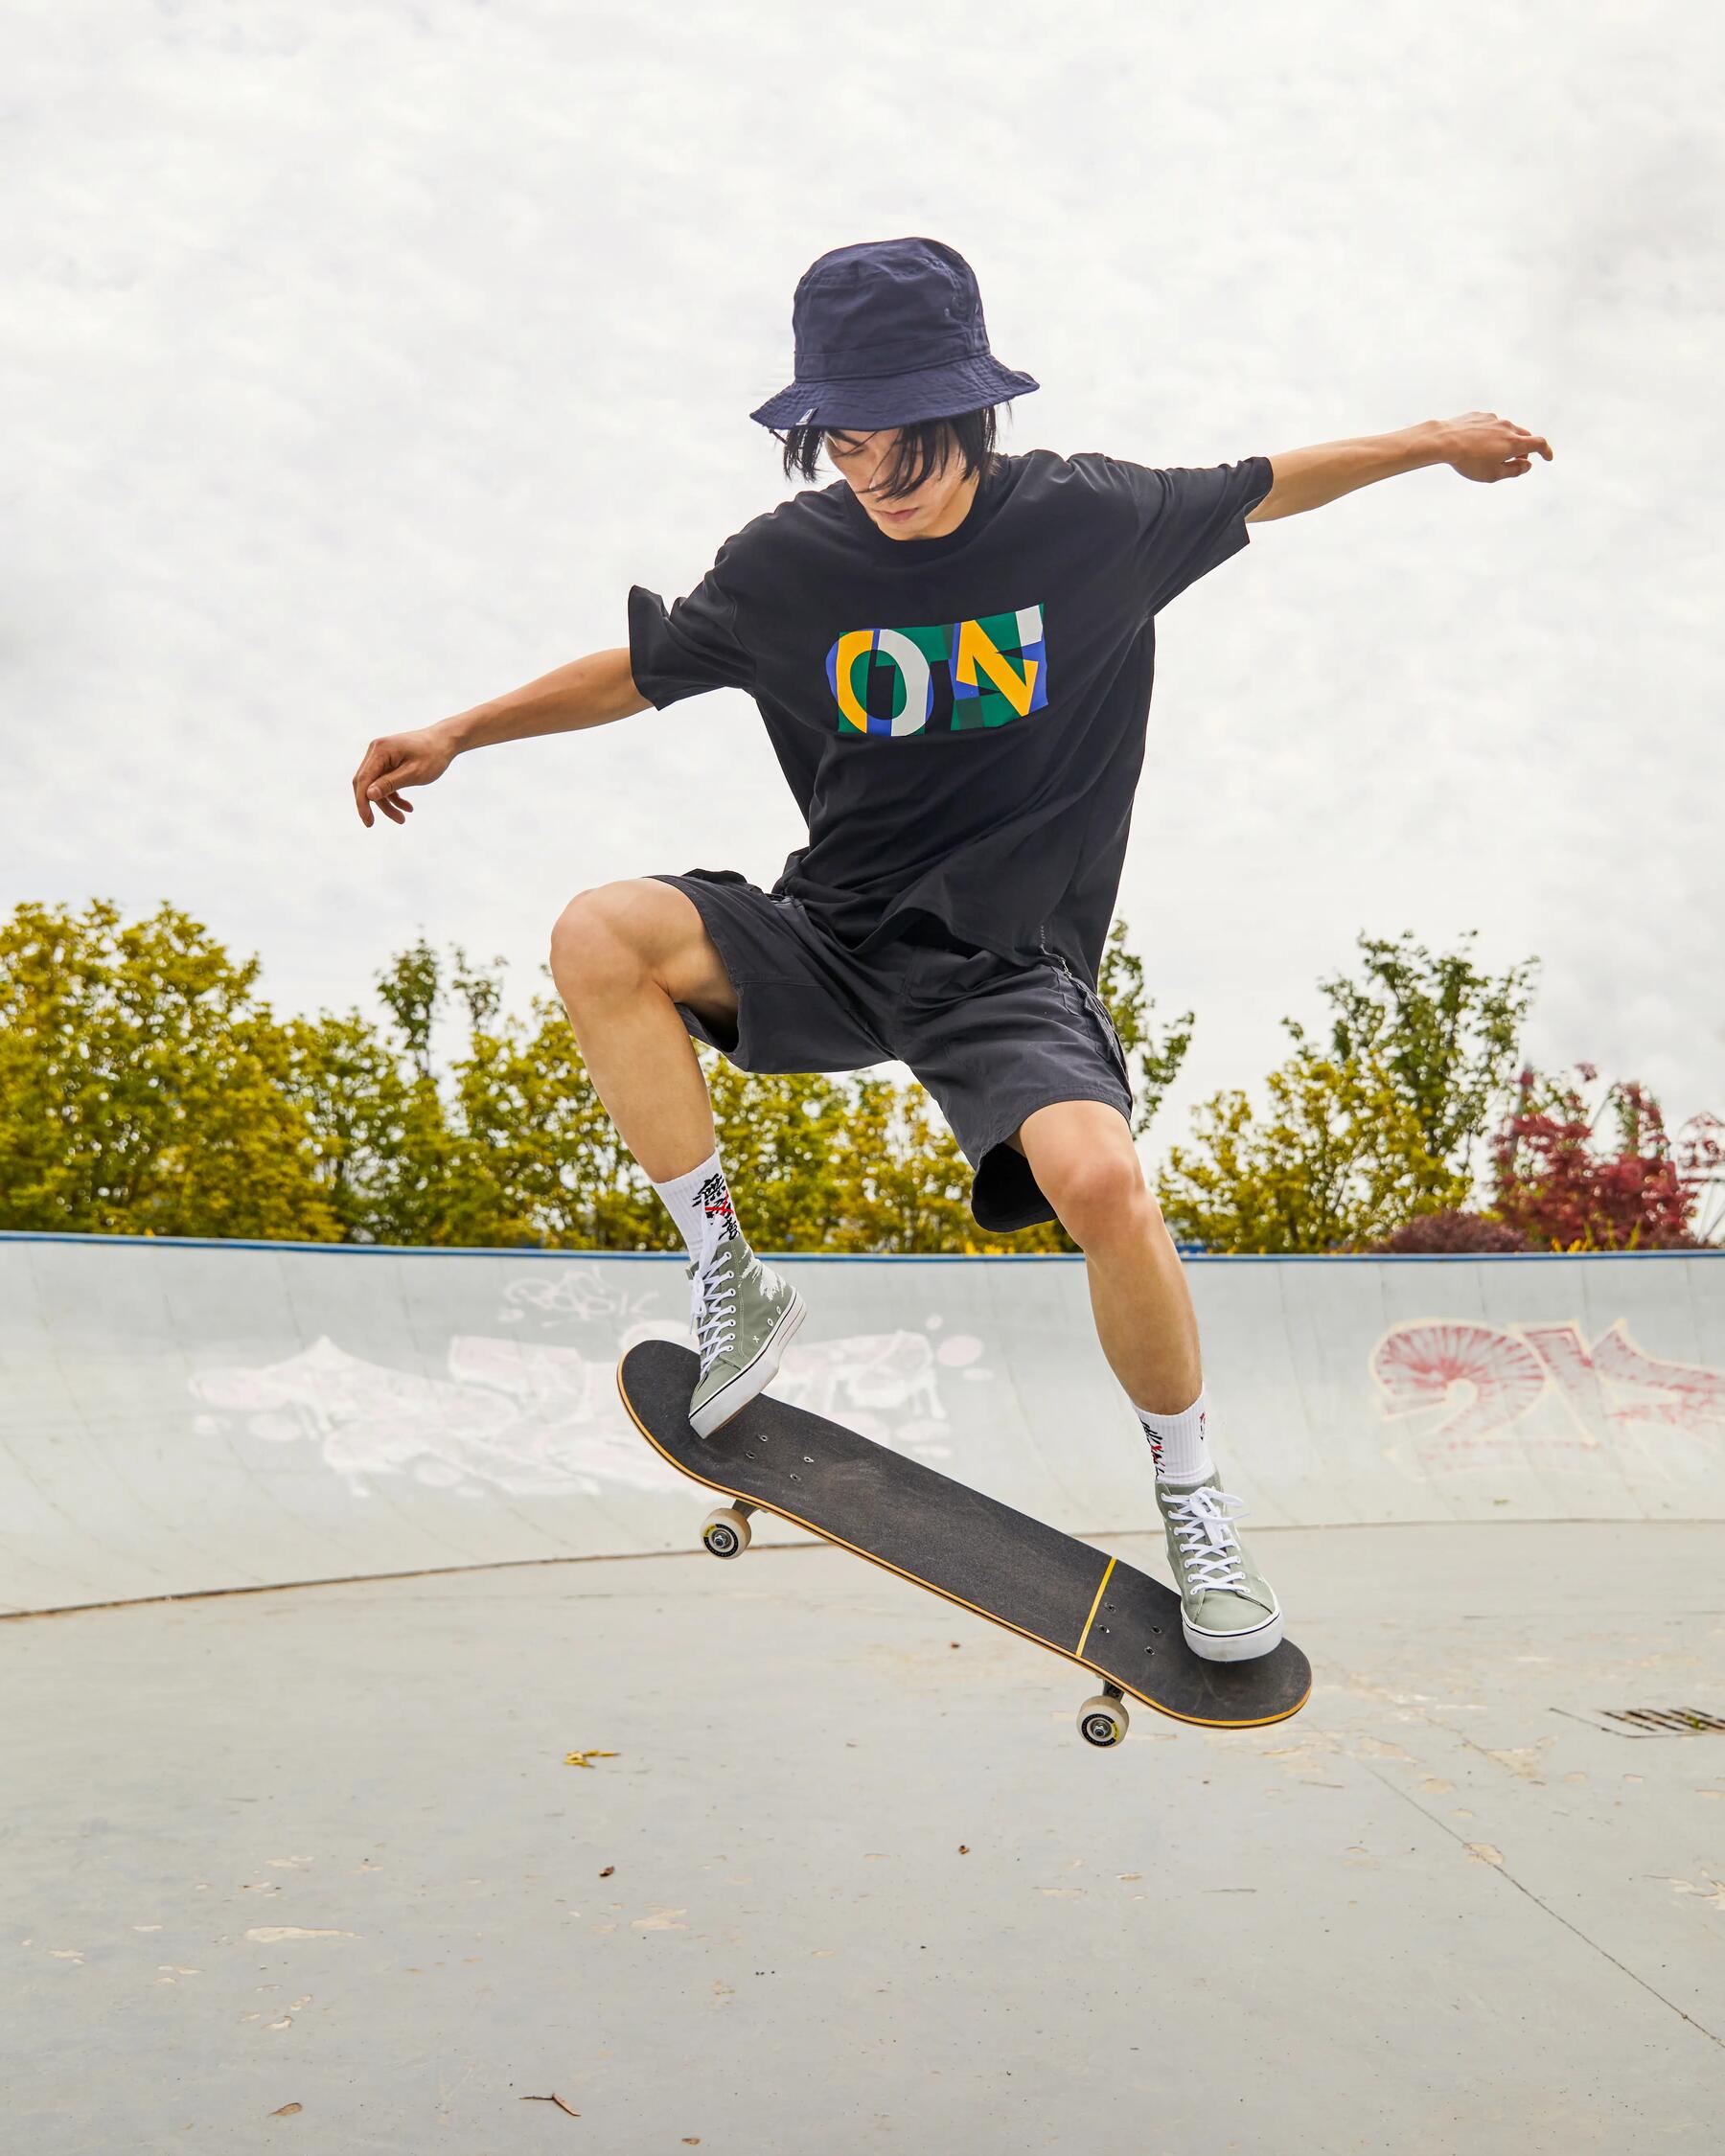 Chłopak robiący ollie na deskorolce na skateparku